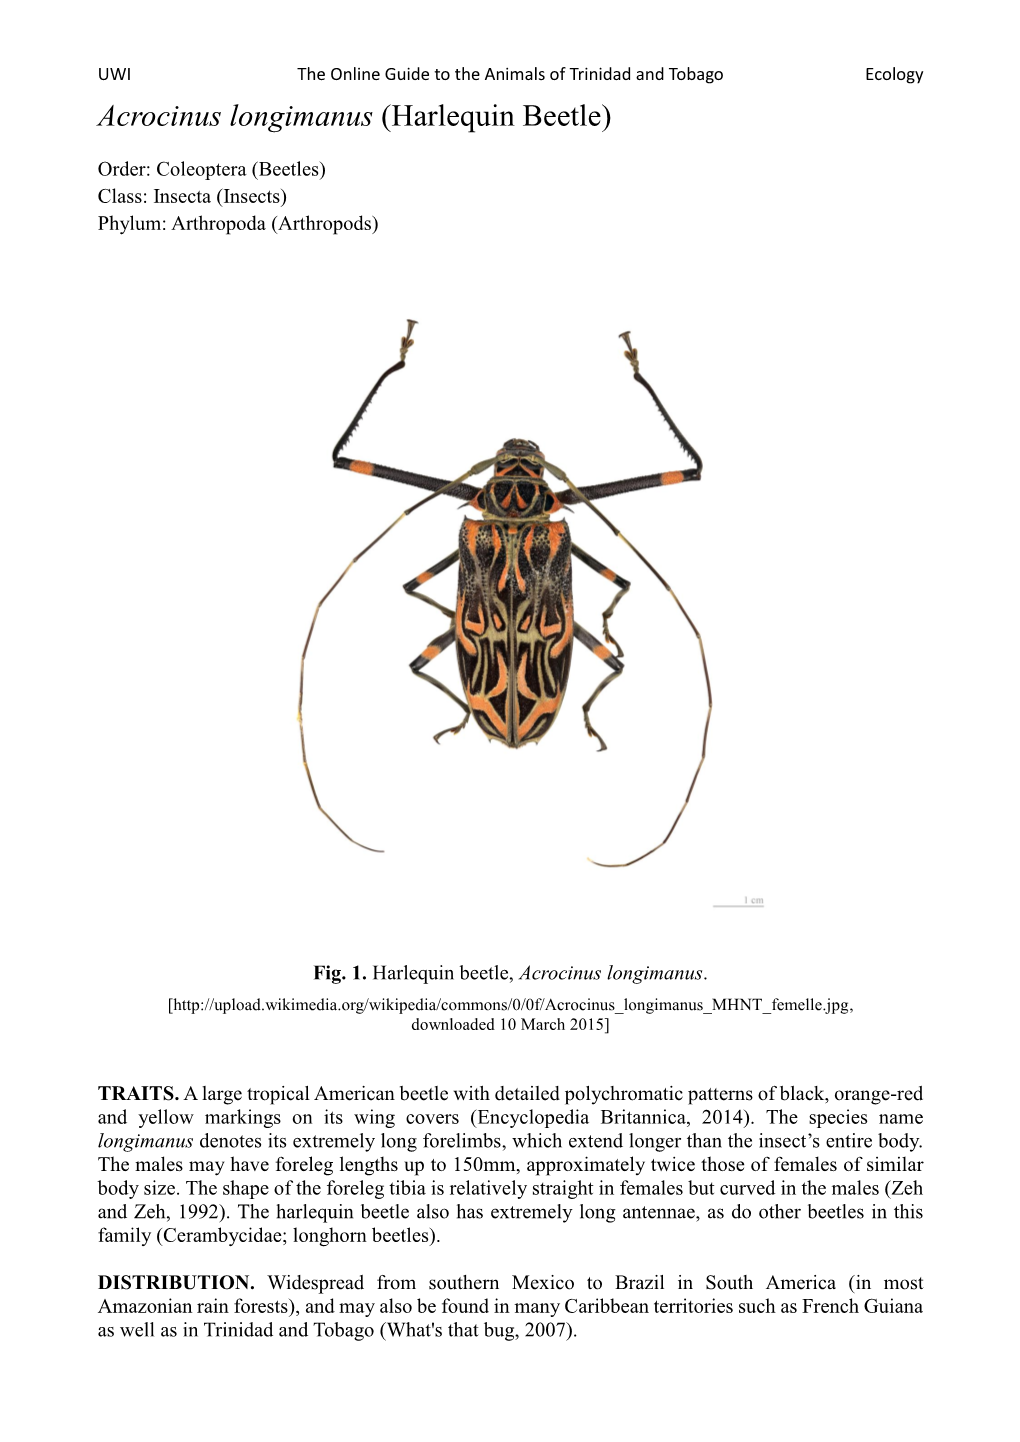 Acrocinus Longimanus (Harlequin Beetle)